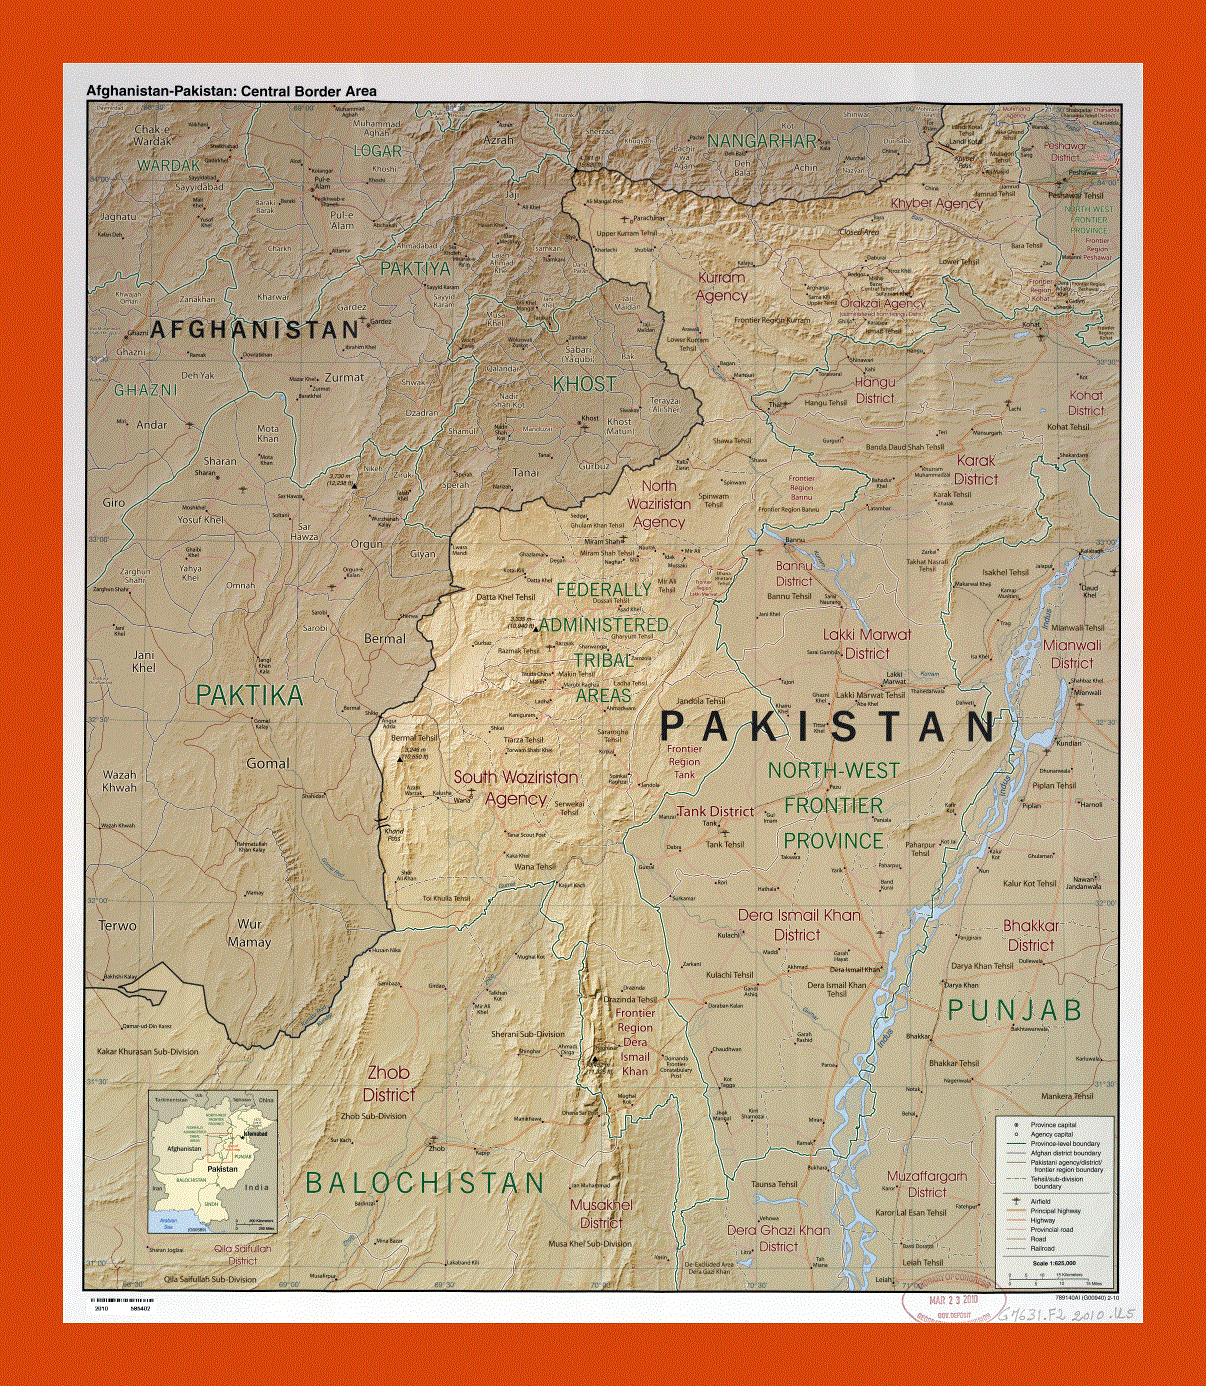 Afghanistan - Pakistan central border area map - 2010